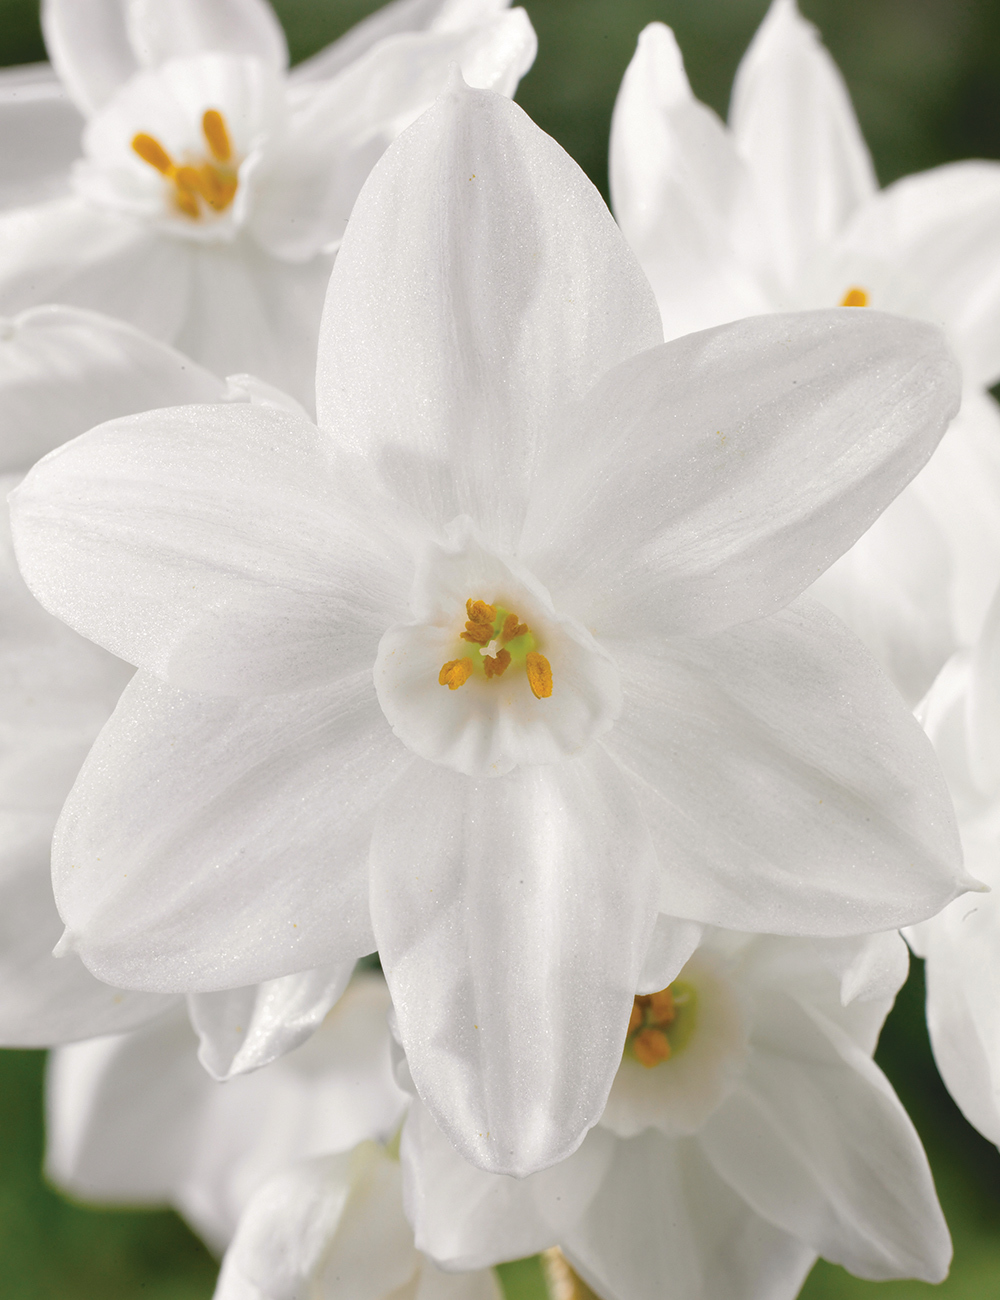 Scented Daffodil Paperwhite 'Ziva'